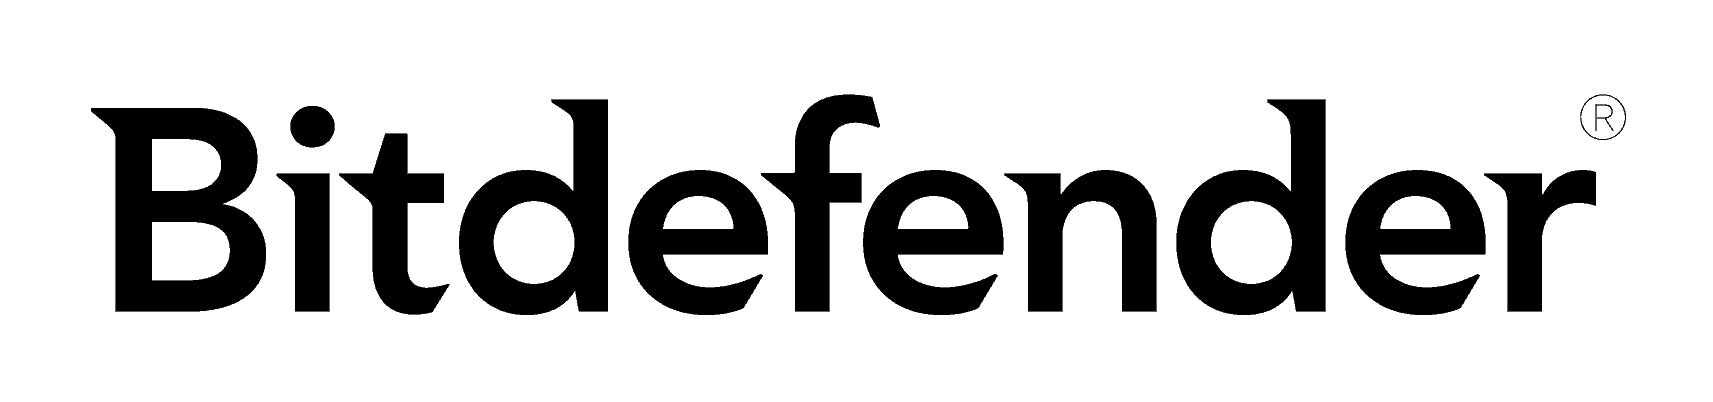 athenahealth logo, color